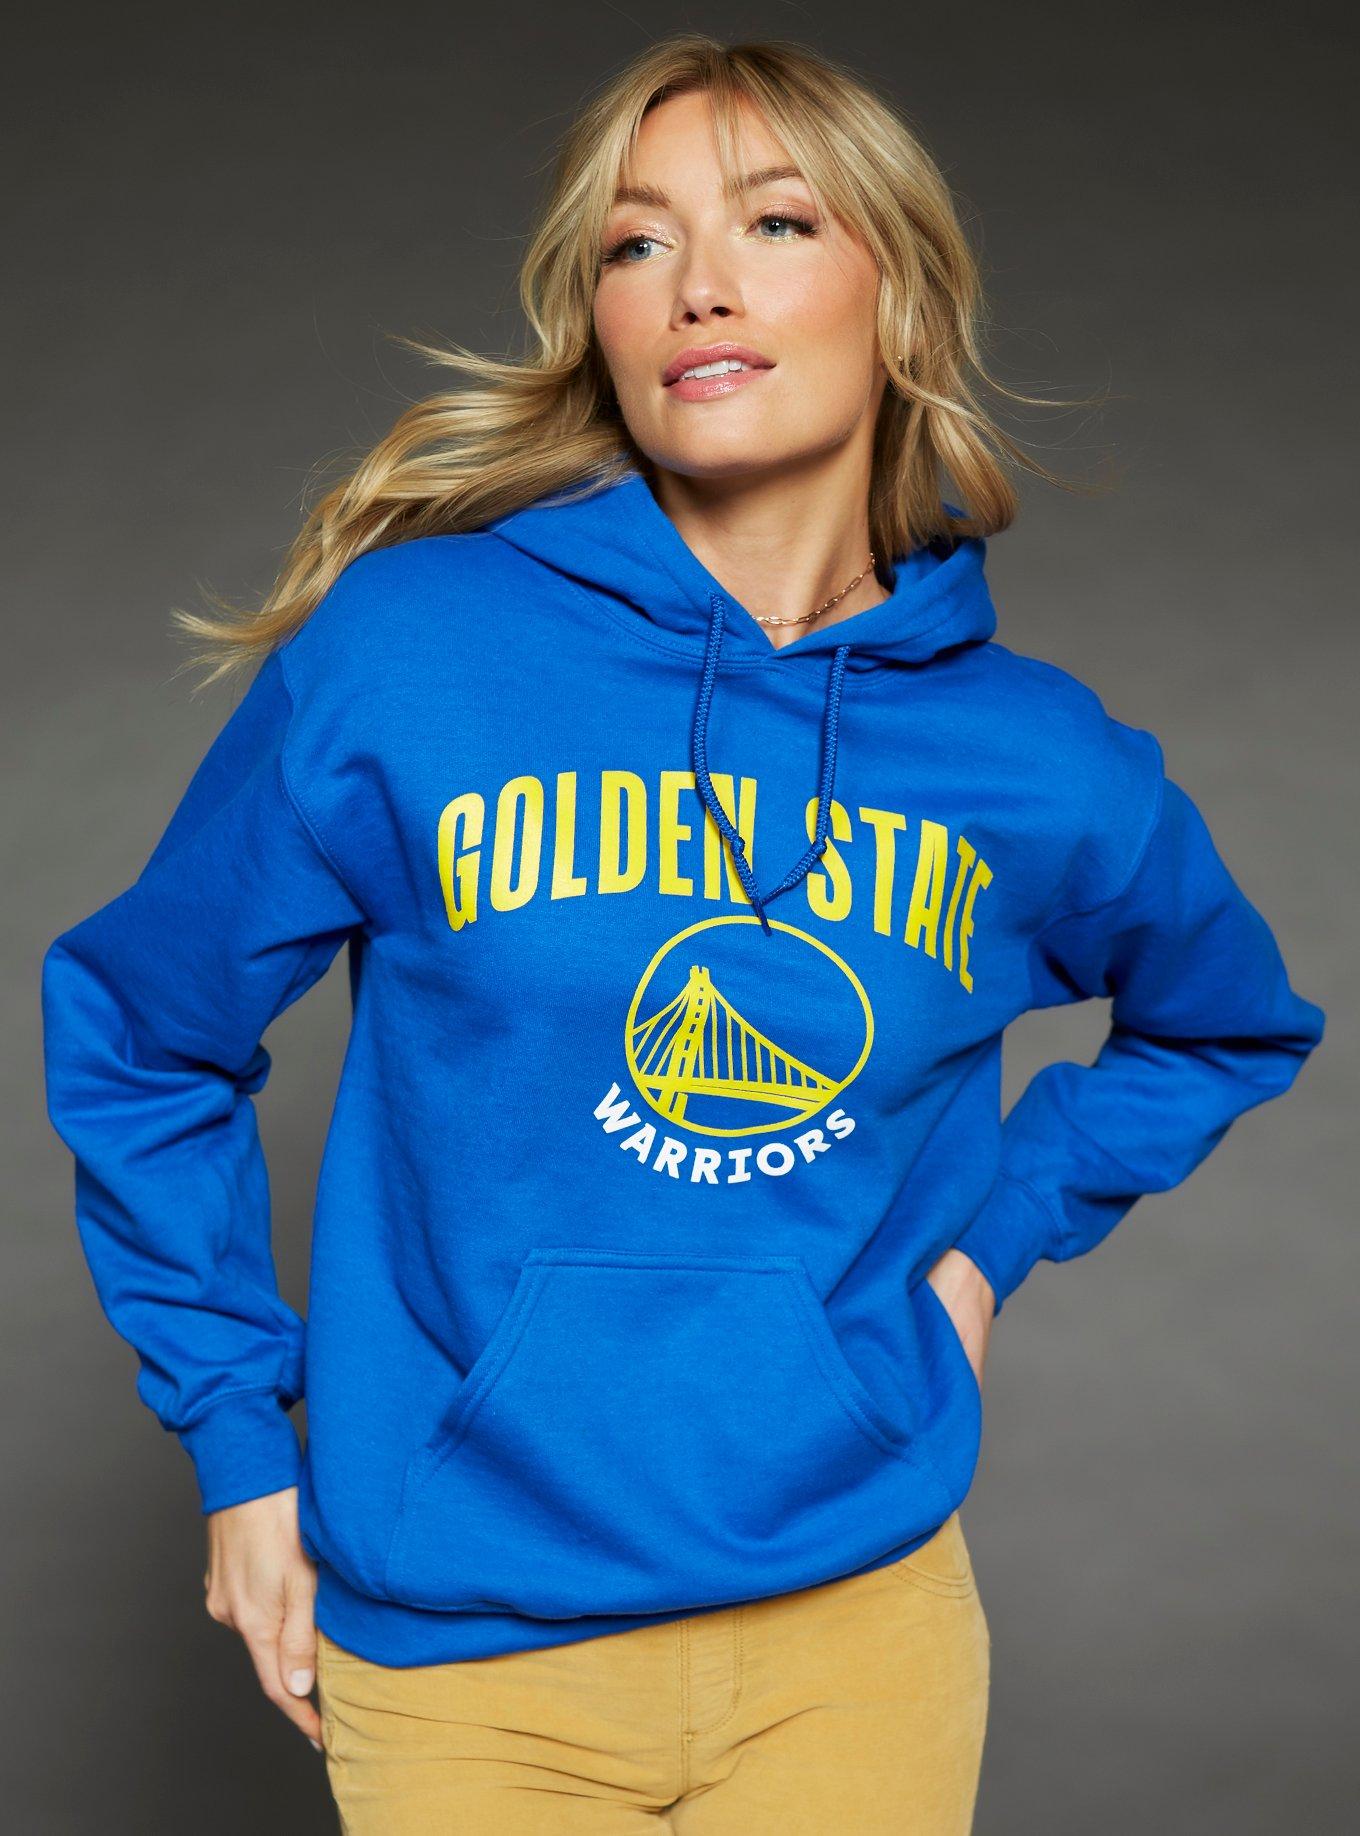 Golden State Warriors Sweatshirts